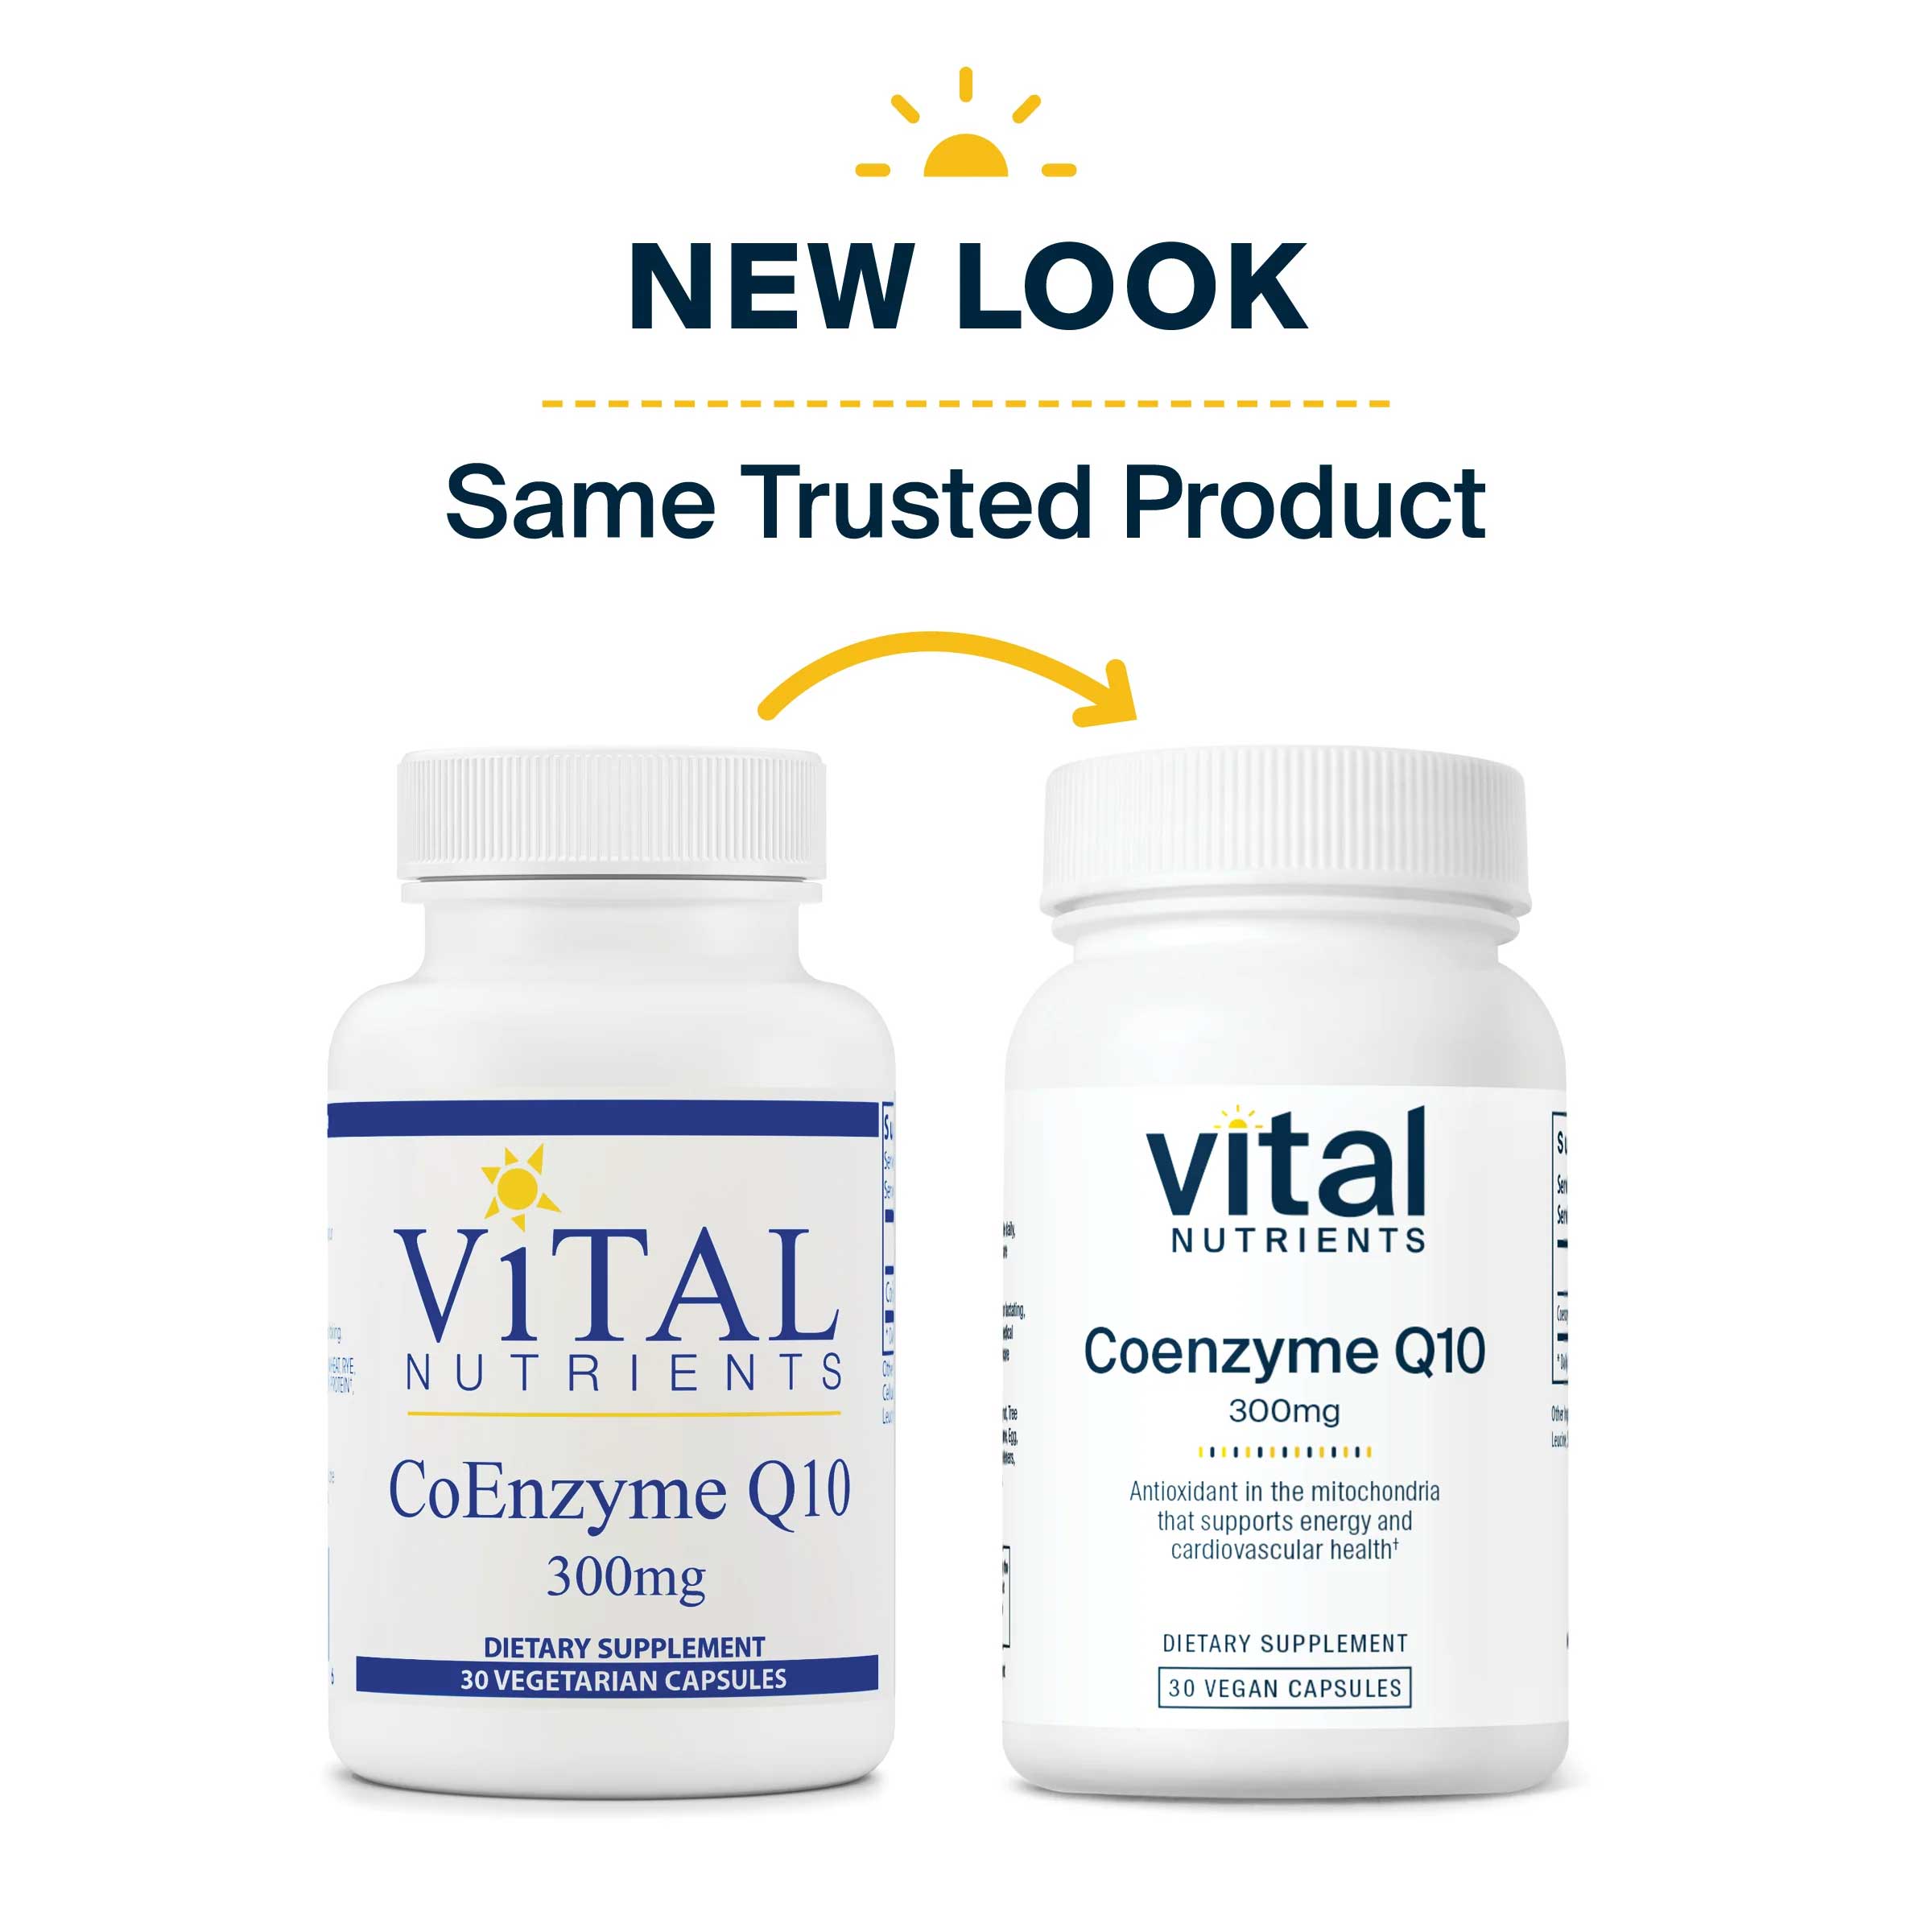 Vital Nutrients CoEnzyme Q10 300mg New Look